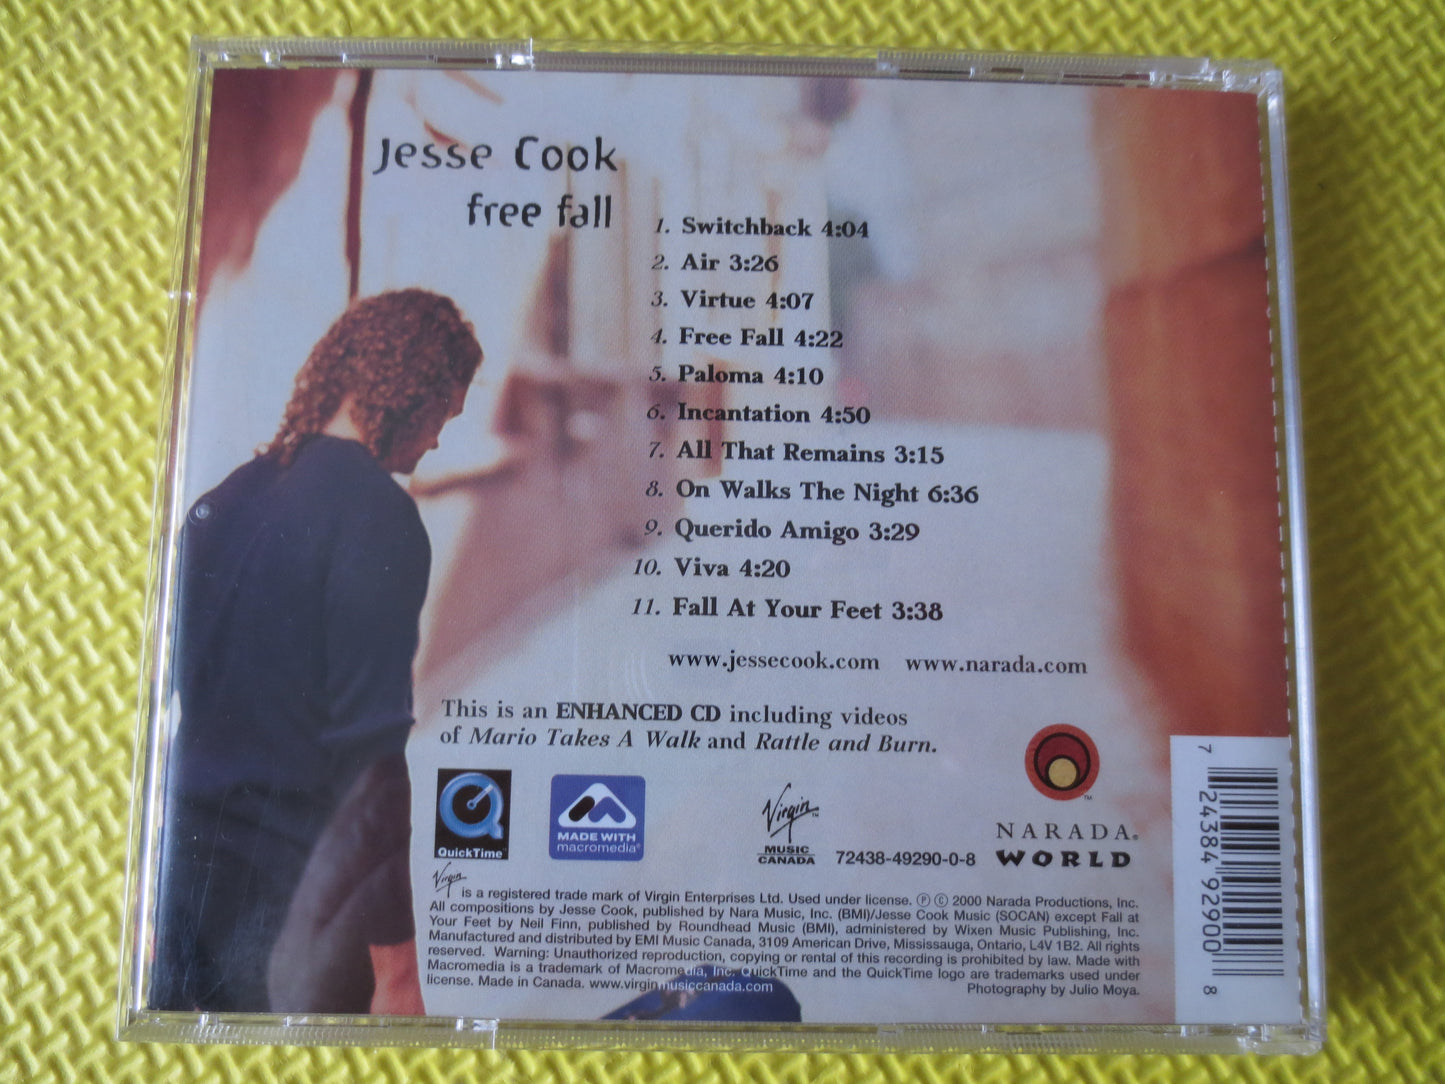 JESSE COOK, FREE Fall, Jesse Cook Cd, Jesse Cook Albums, Jesse Cook Music, Jesse Cook Songs, Flamenco Guitar, 2000 Compact Discs